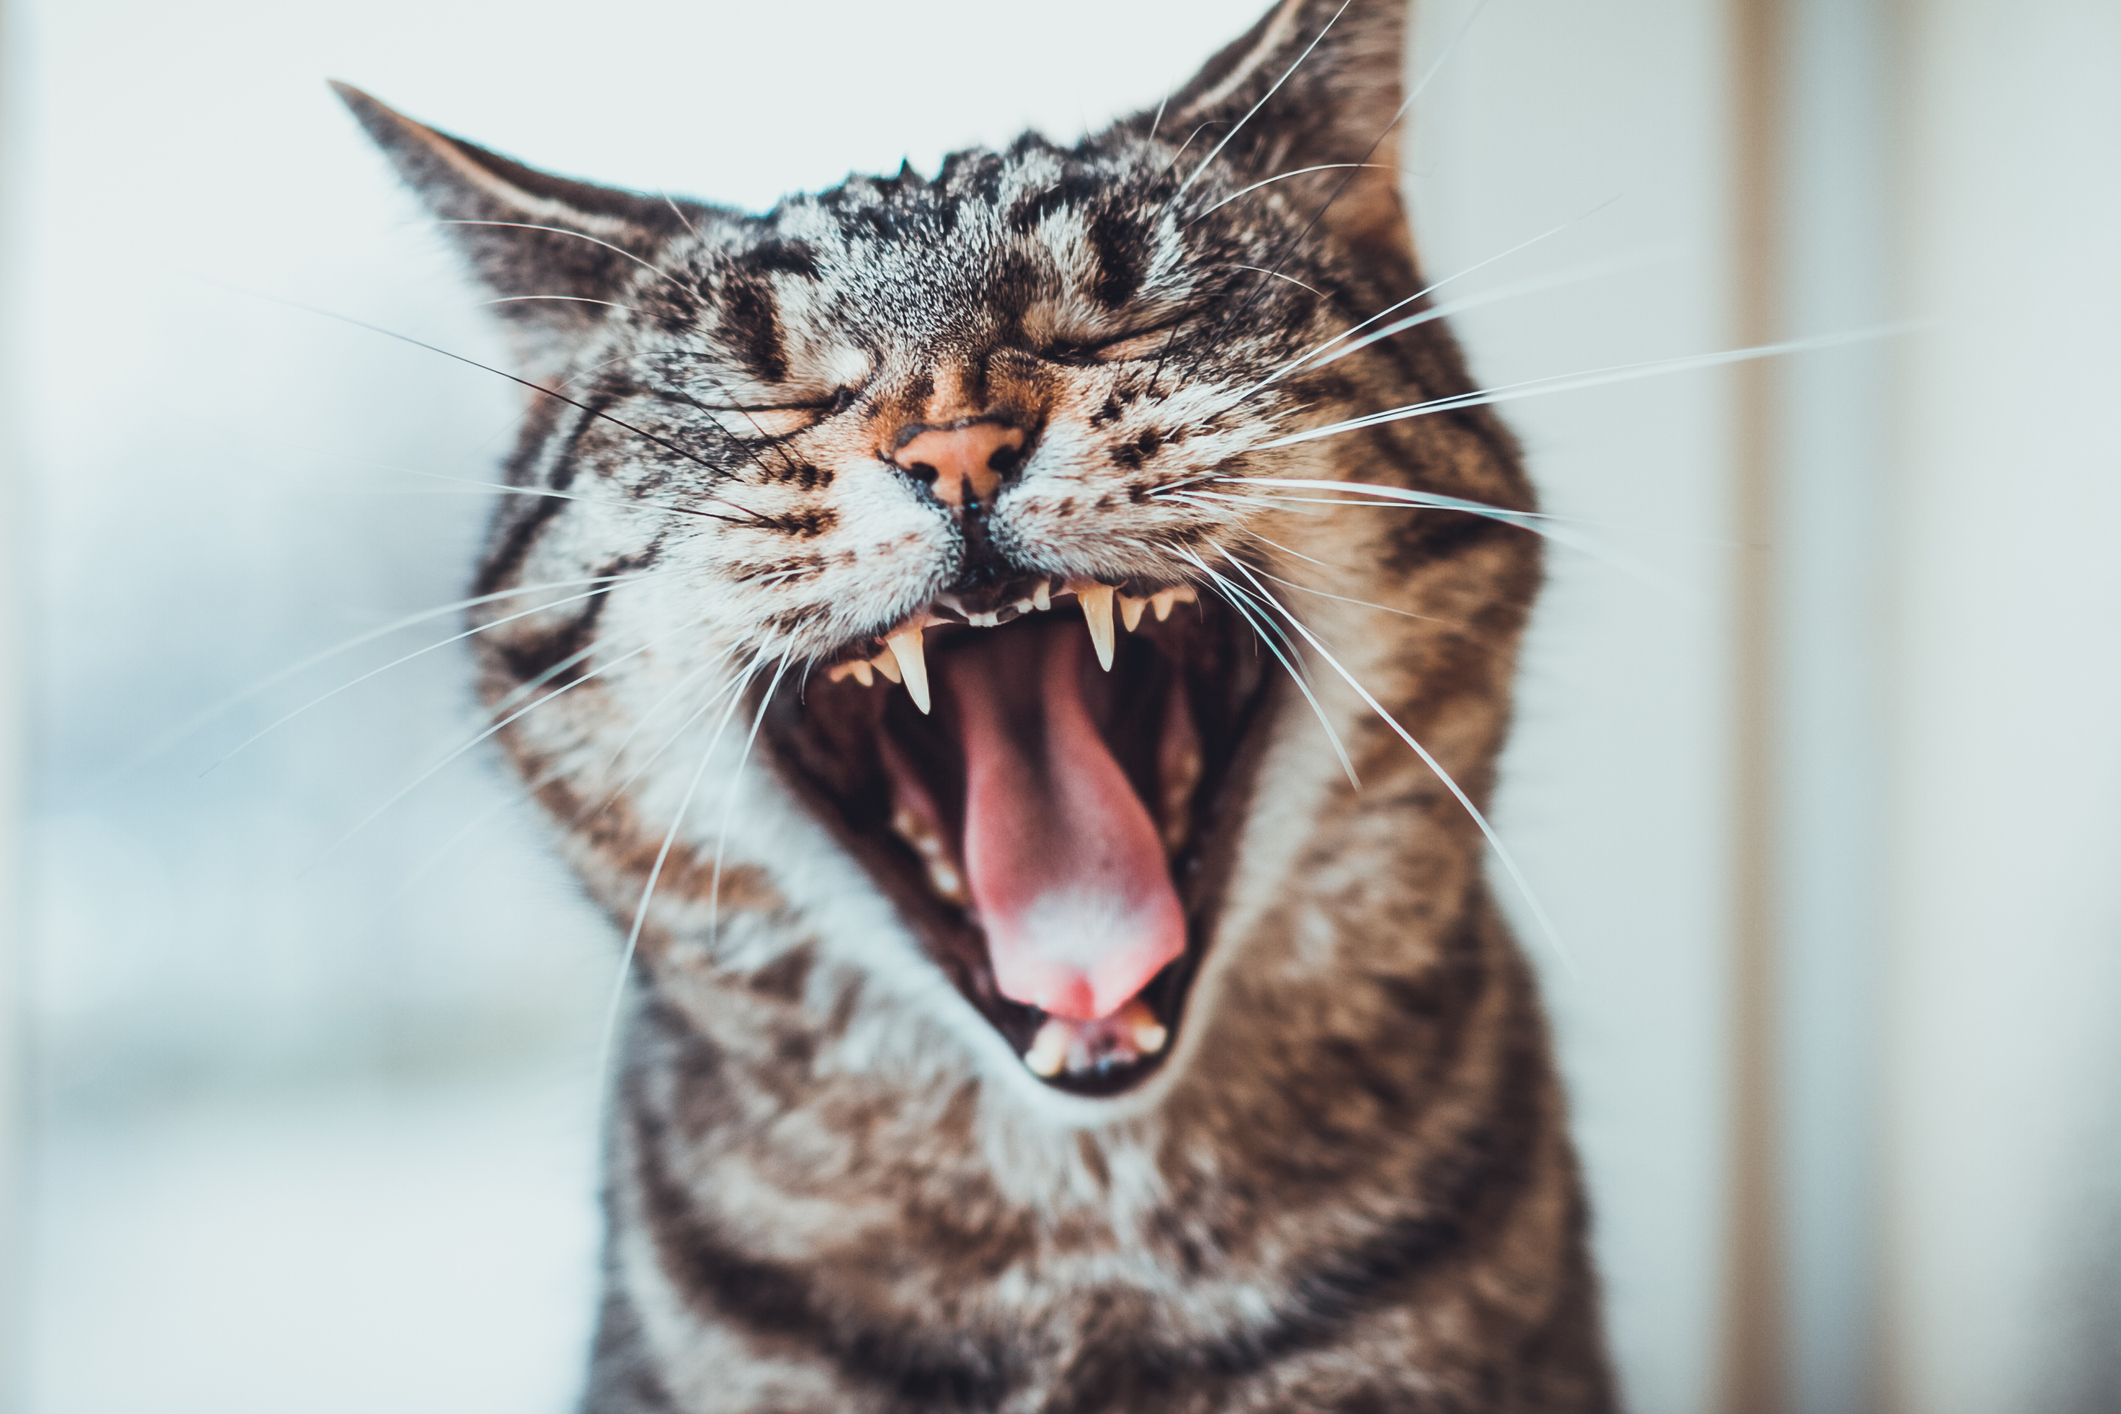 Striped tabby cat giving a big yawn